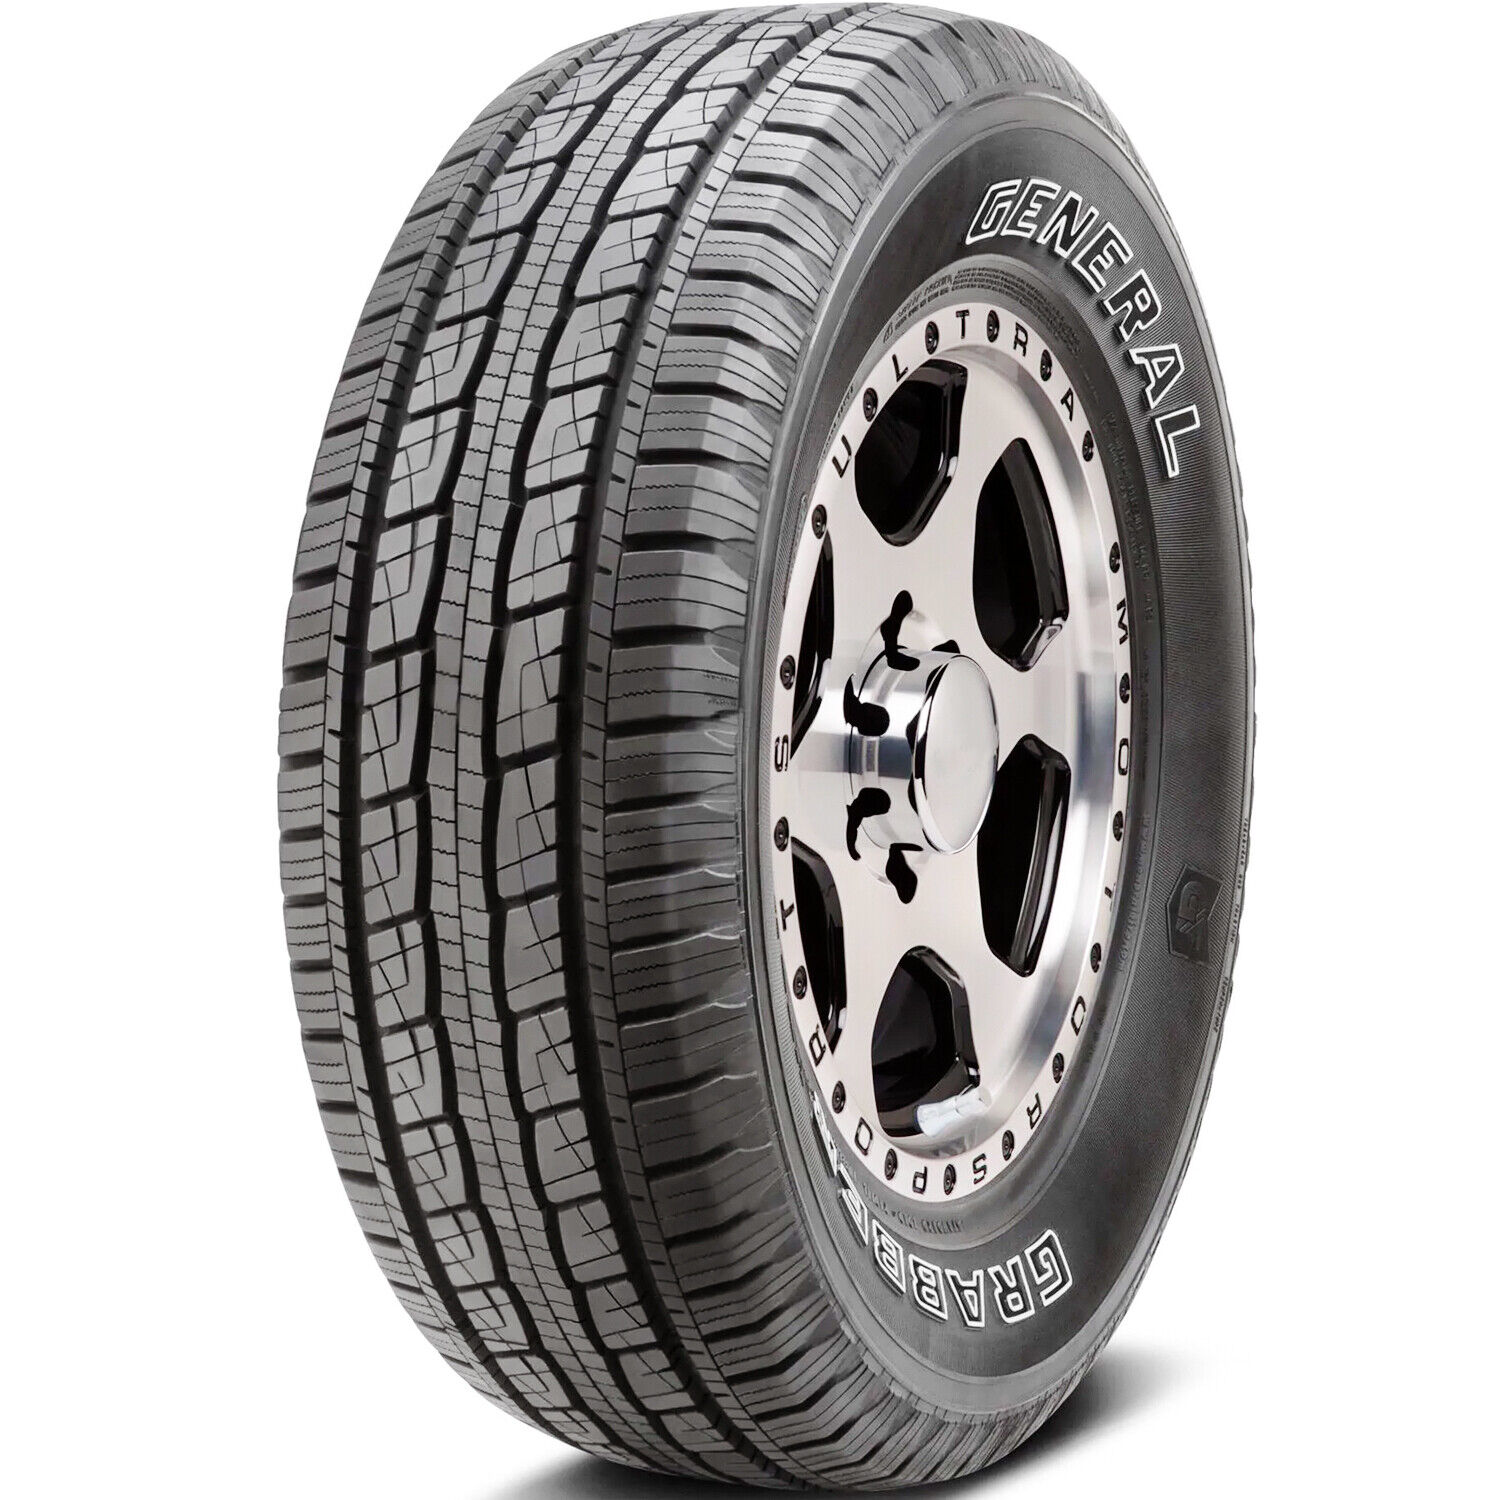 Tire General Grabber HTS 60 265/75R15 112S A/S All Season